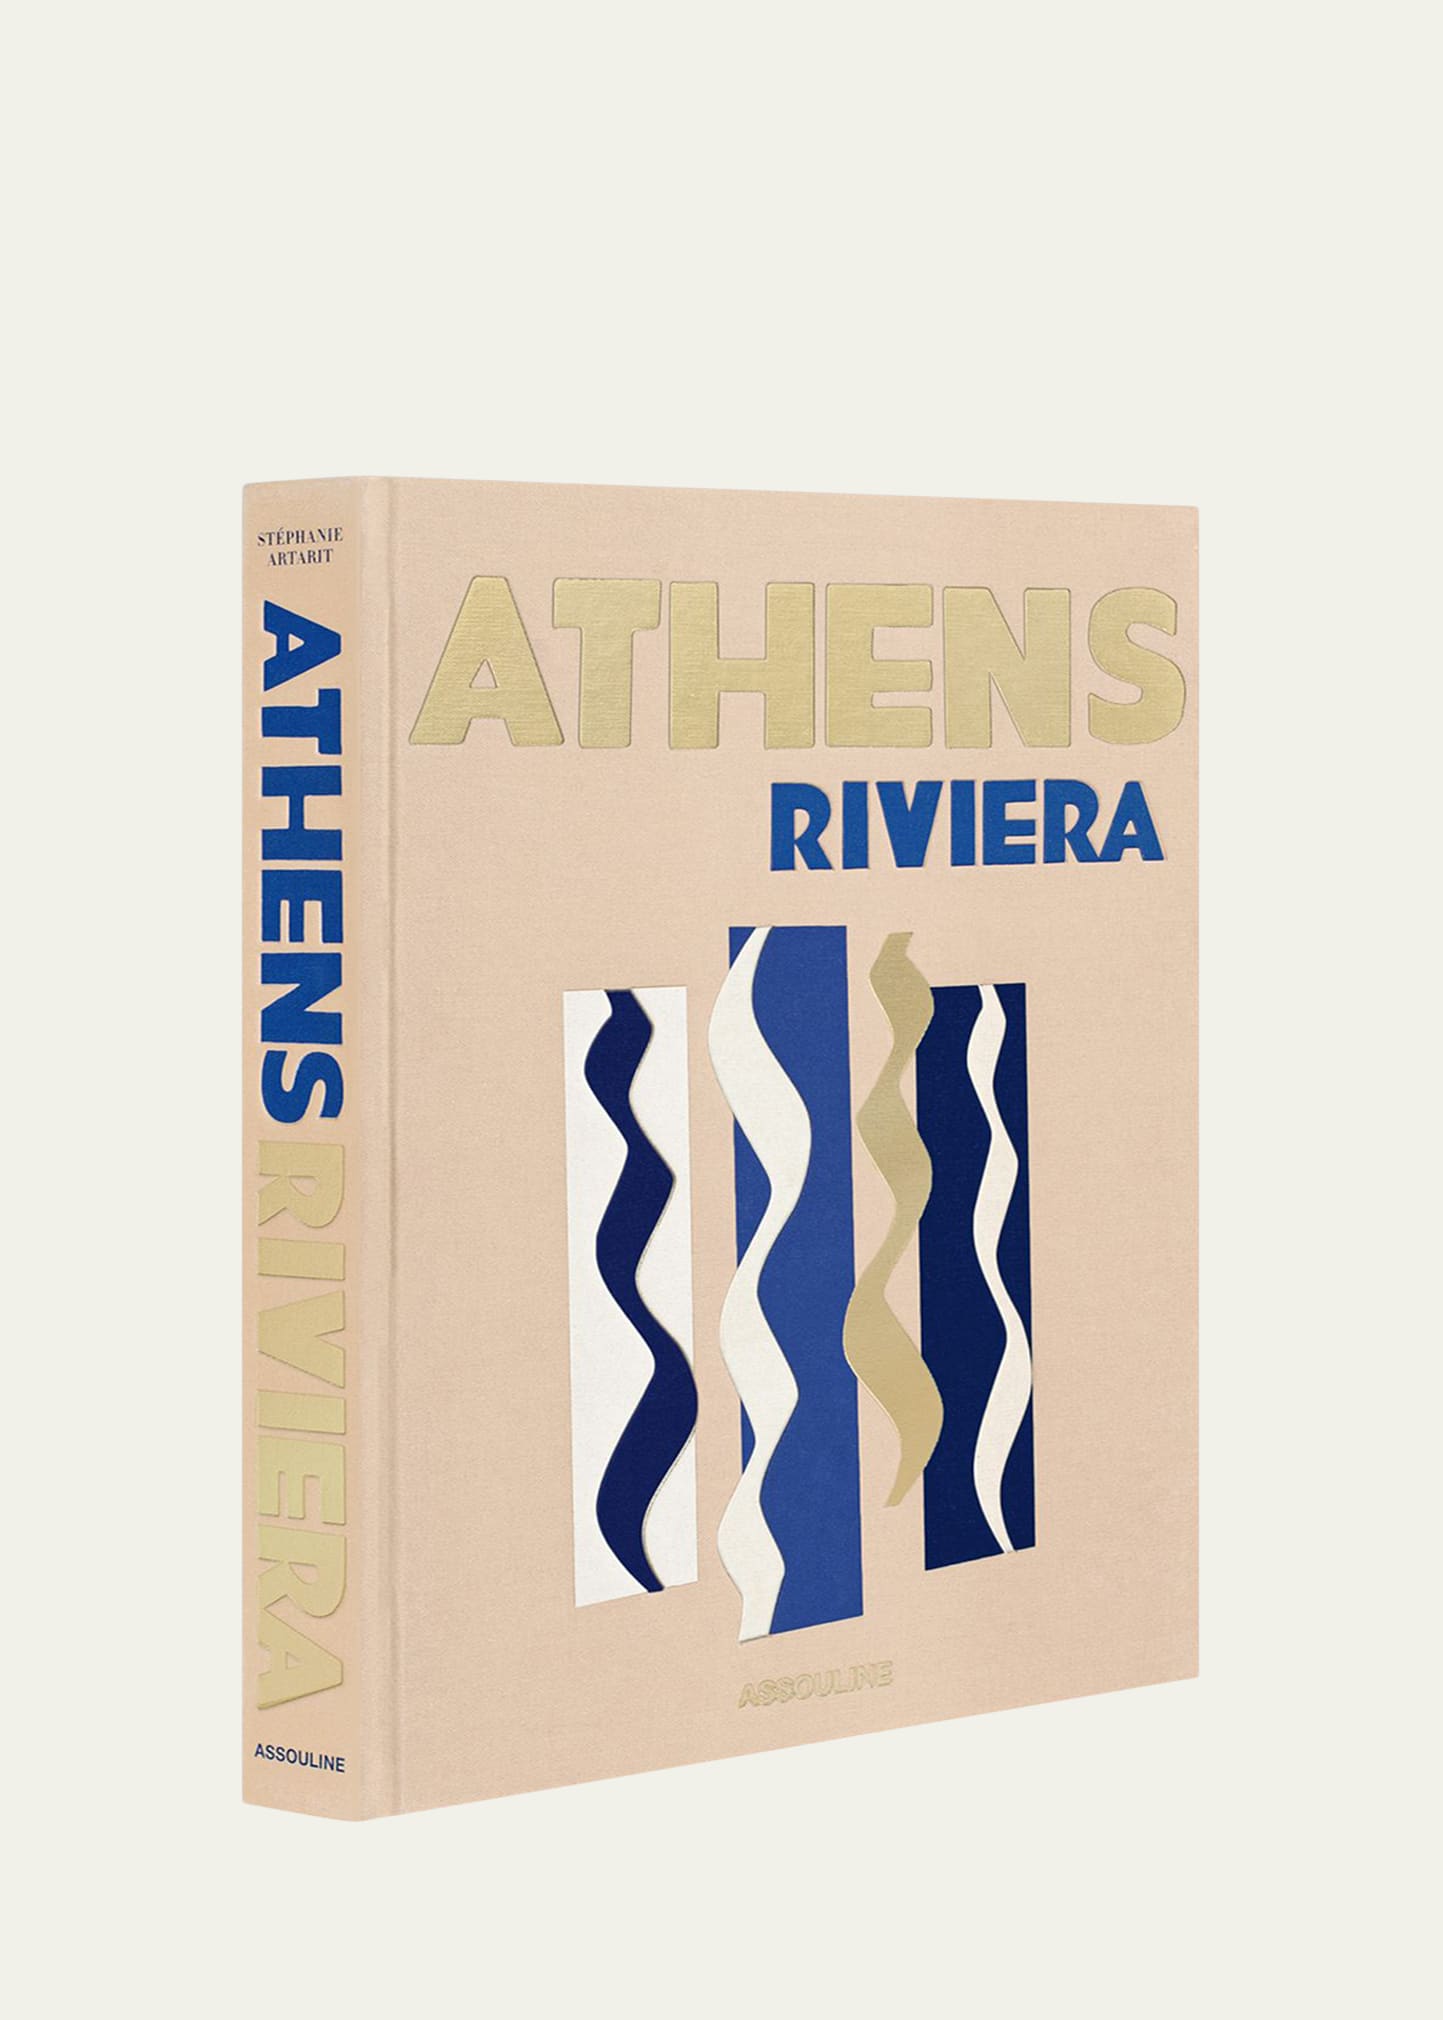 "Athens Riviera" Book